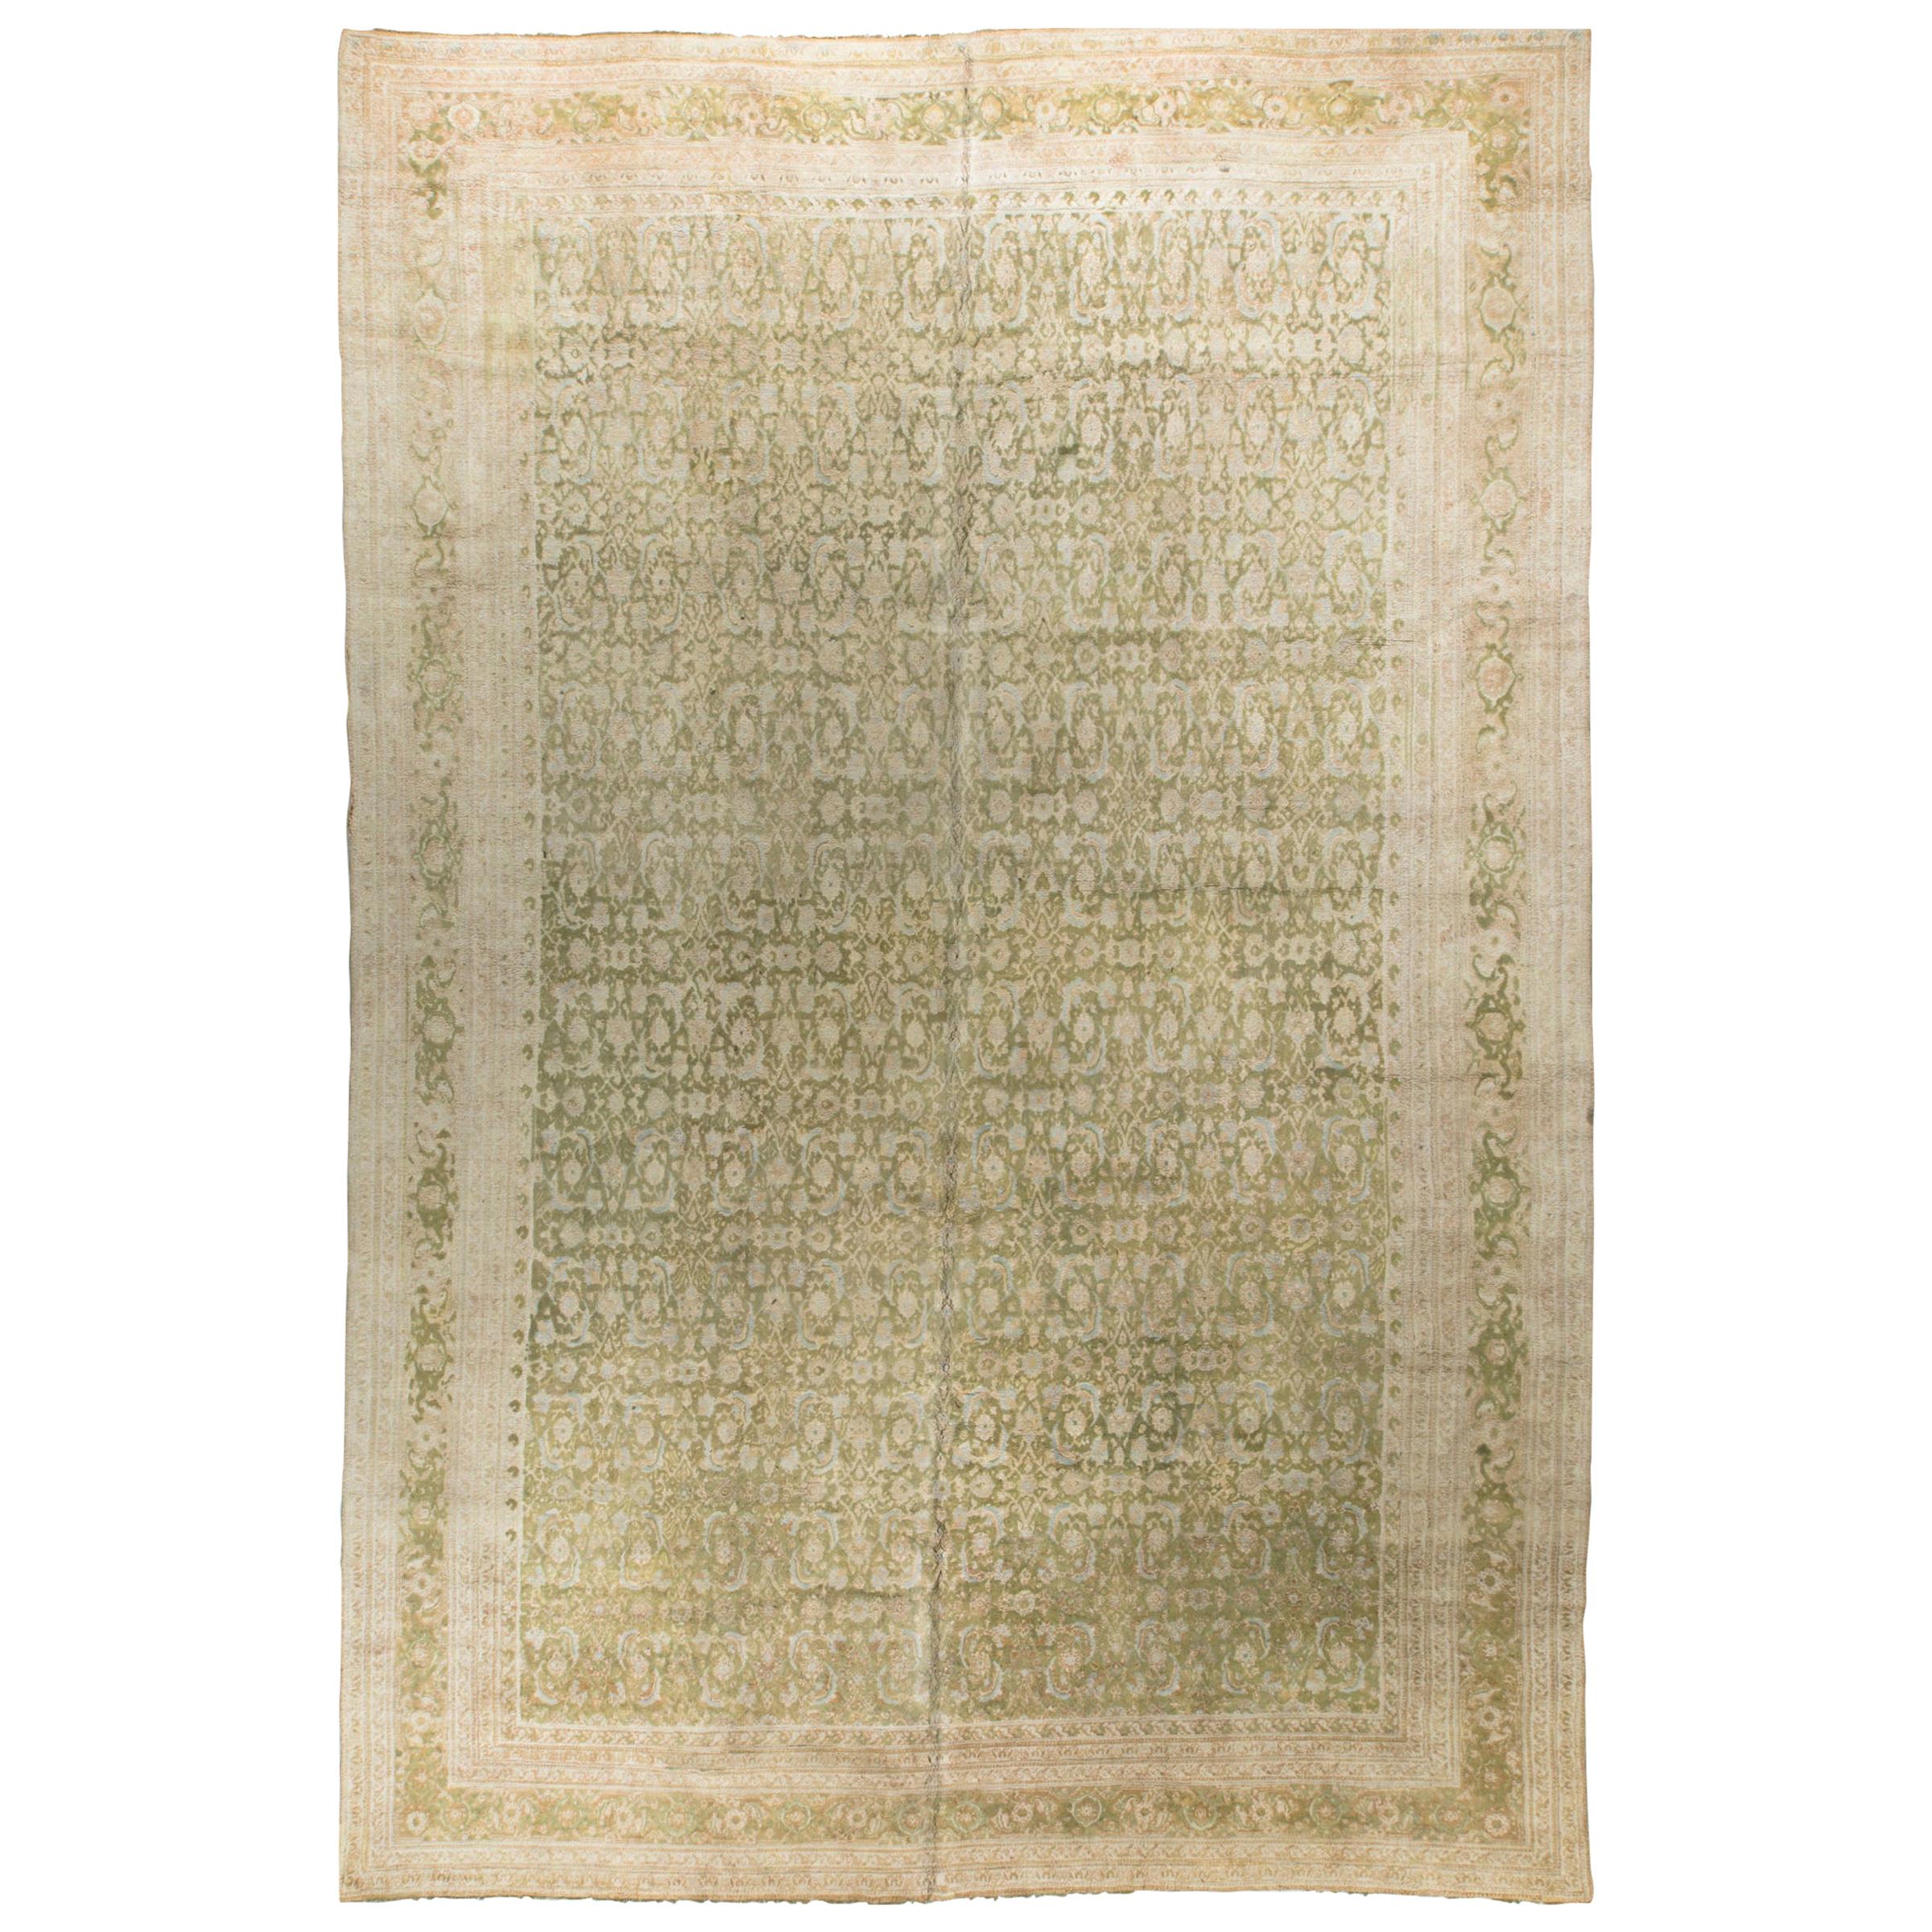 Antique Oversize Indian Cotton Agra Rug, circa 1880  14'4 x 22'3 For Sale